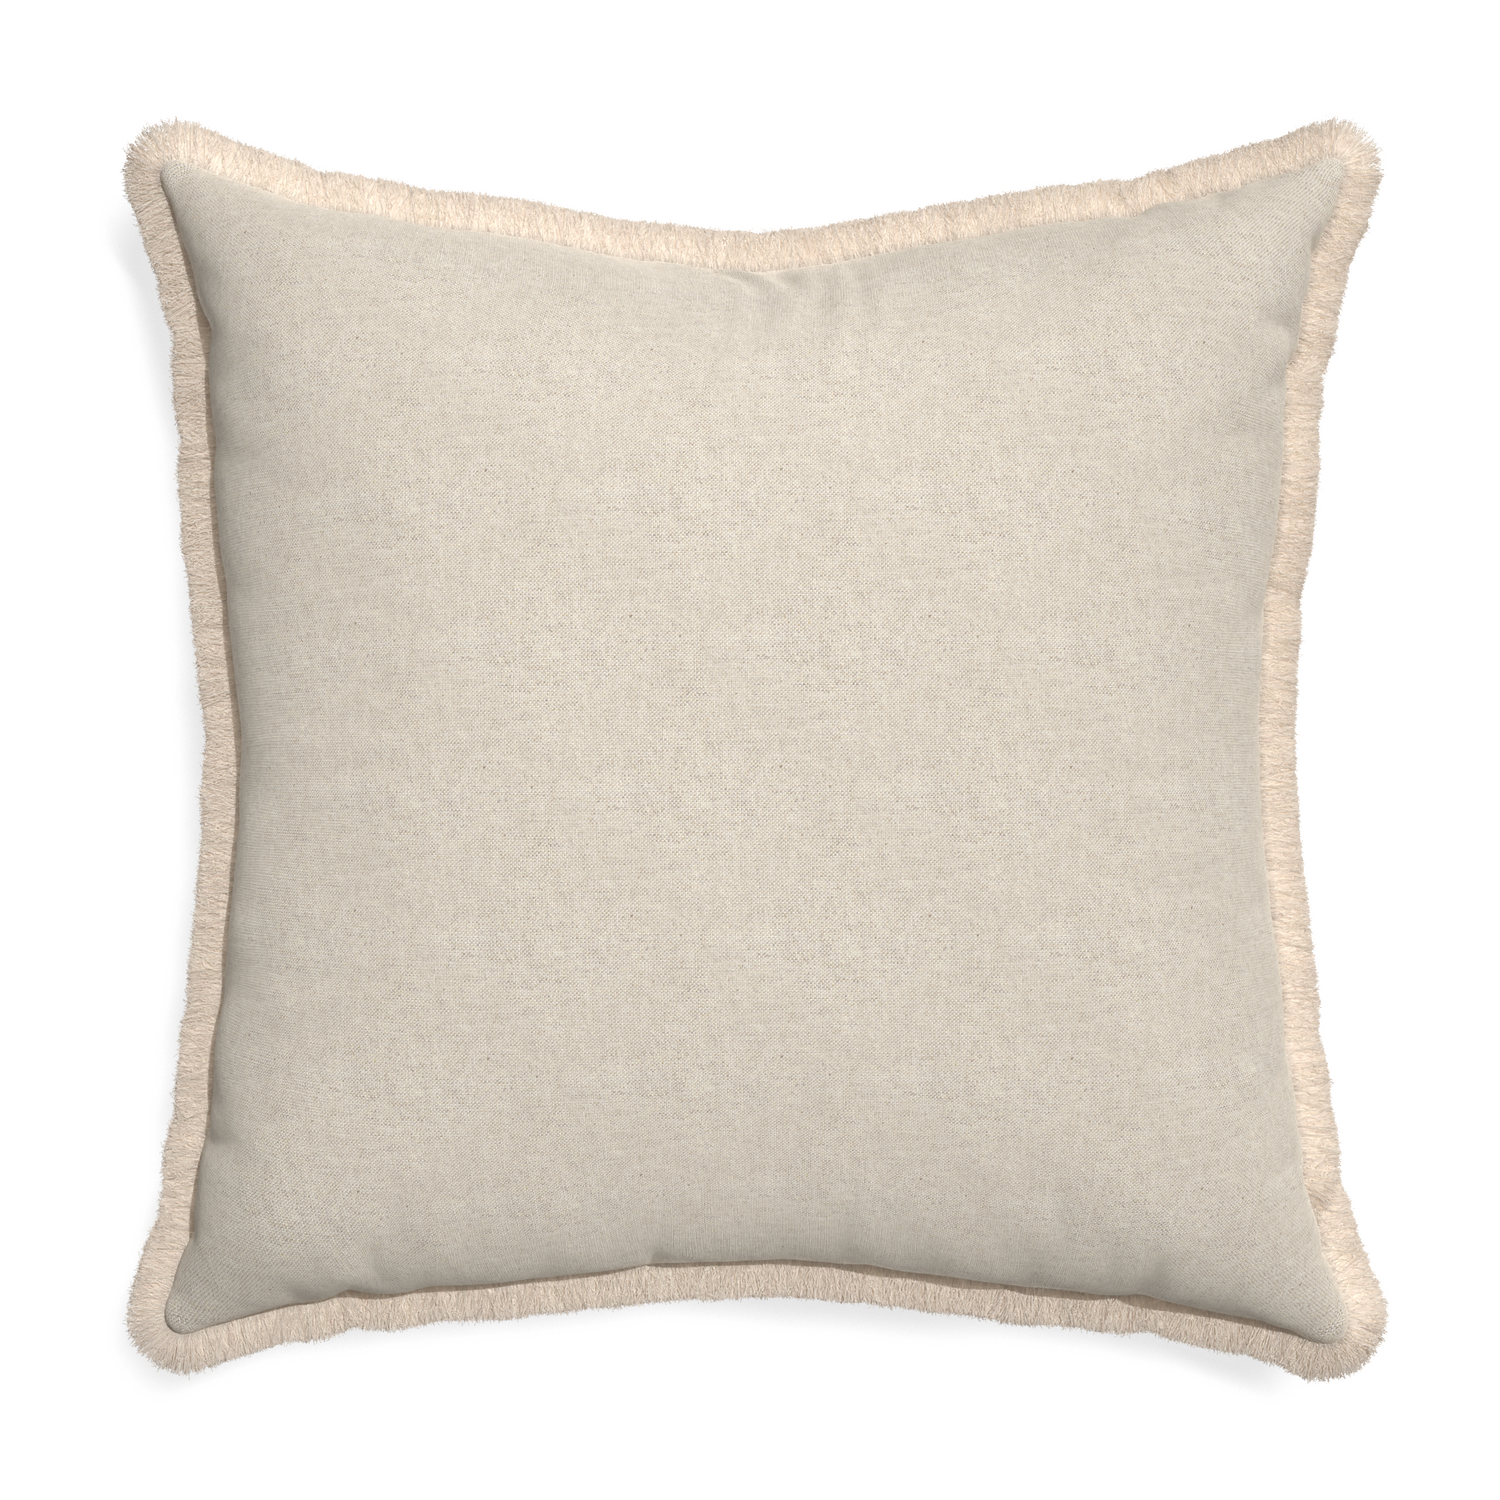 Euro-sham oat custom pillow with cream fringe on white background